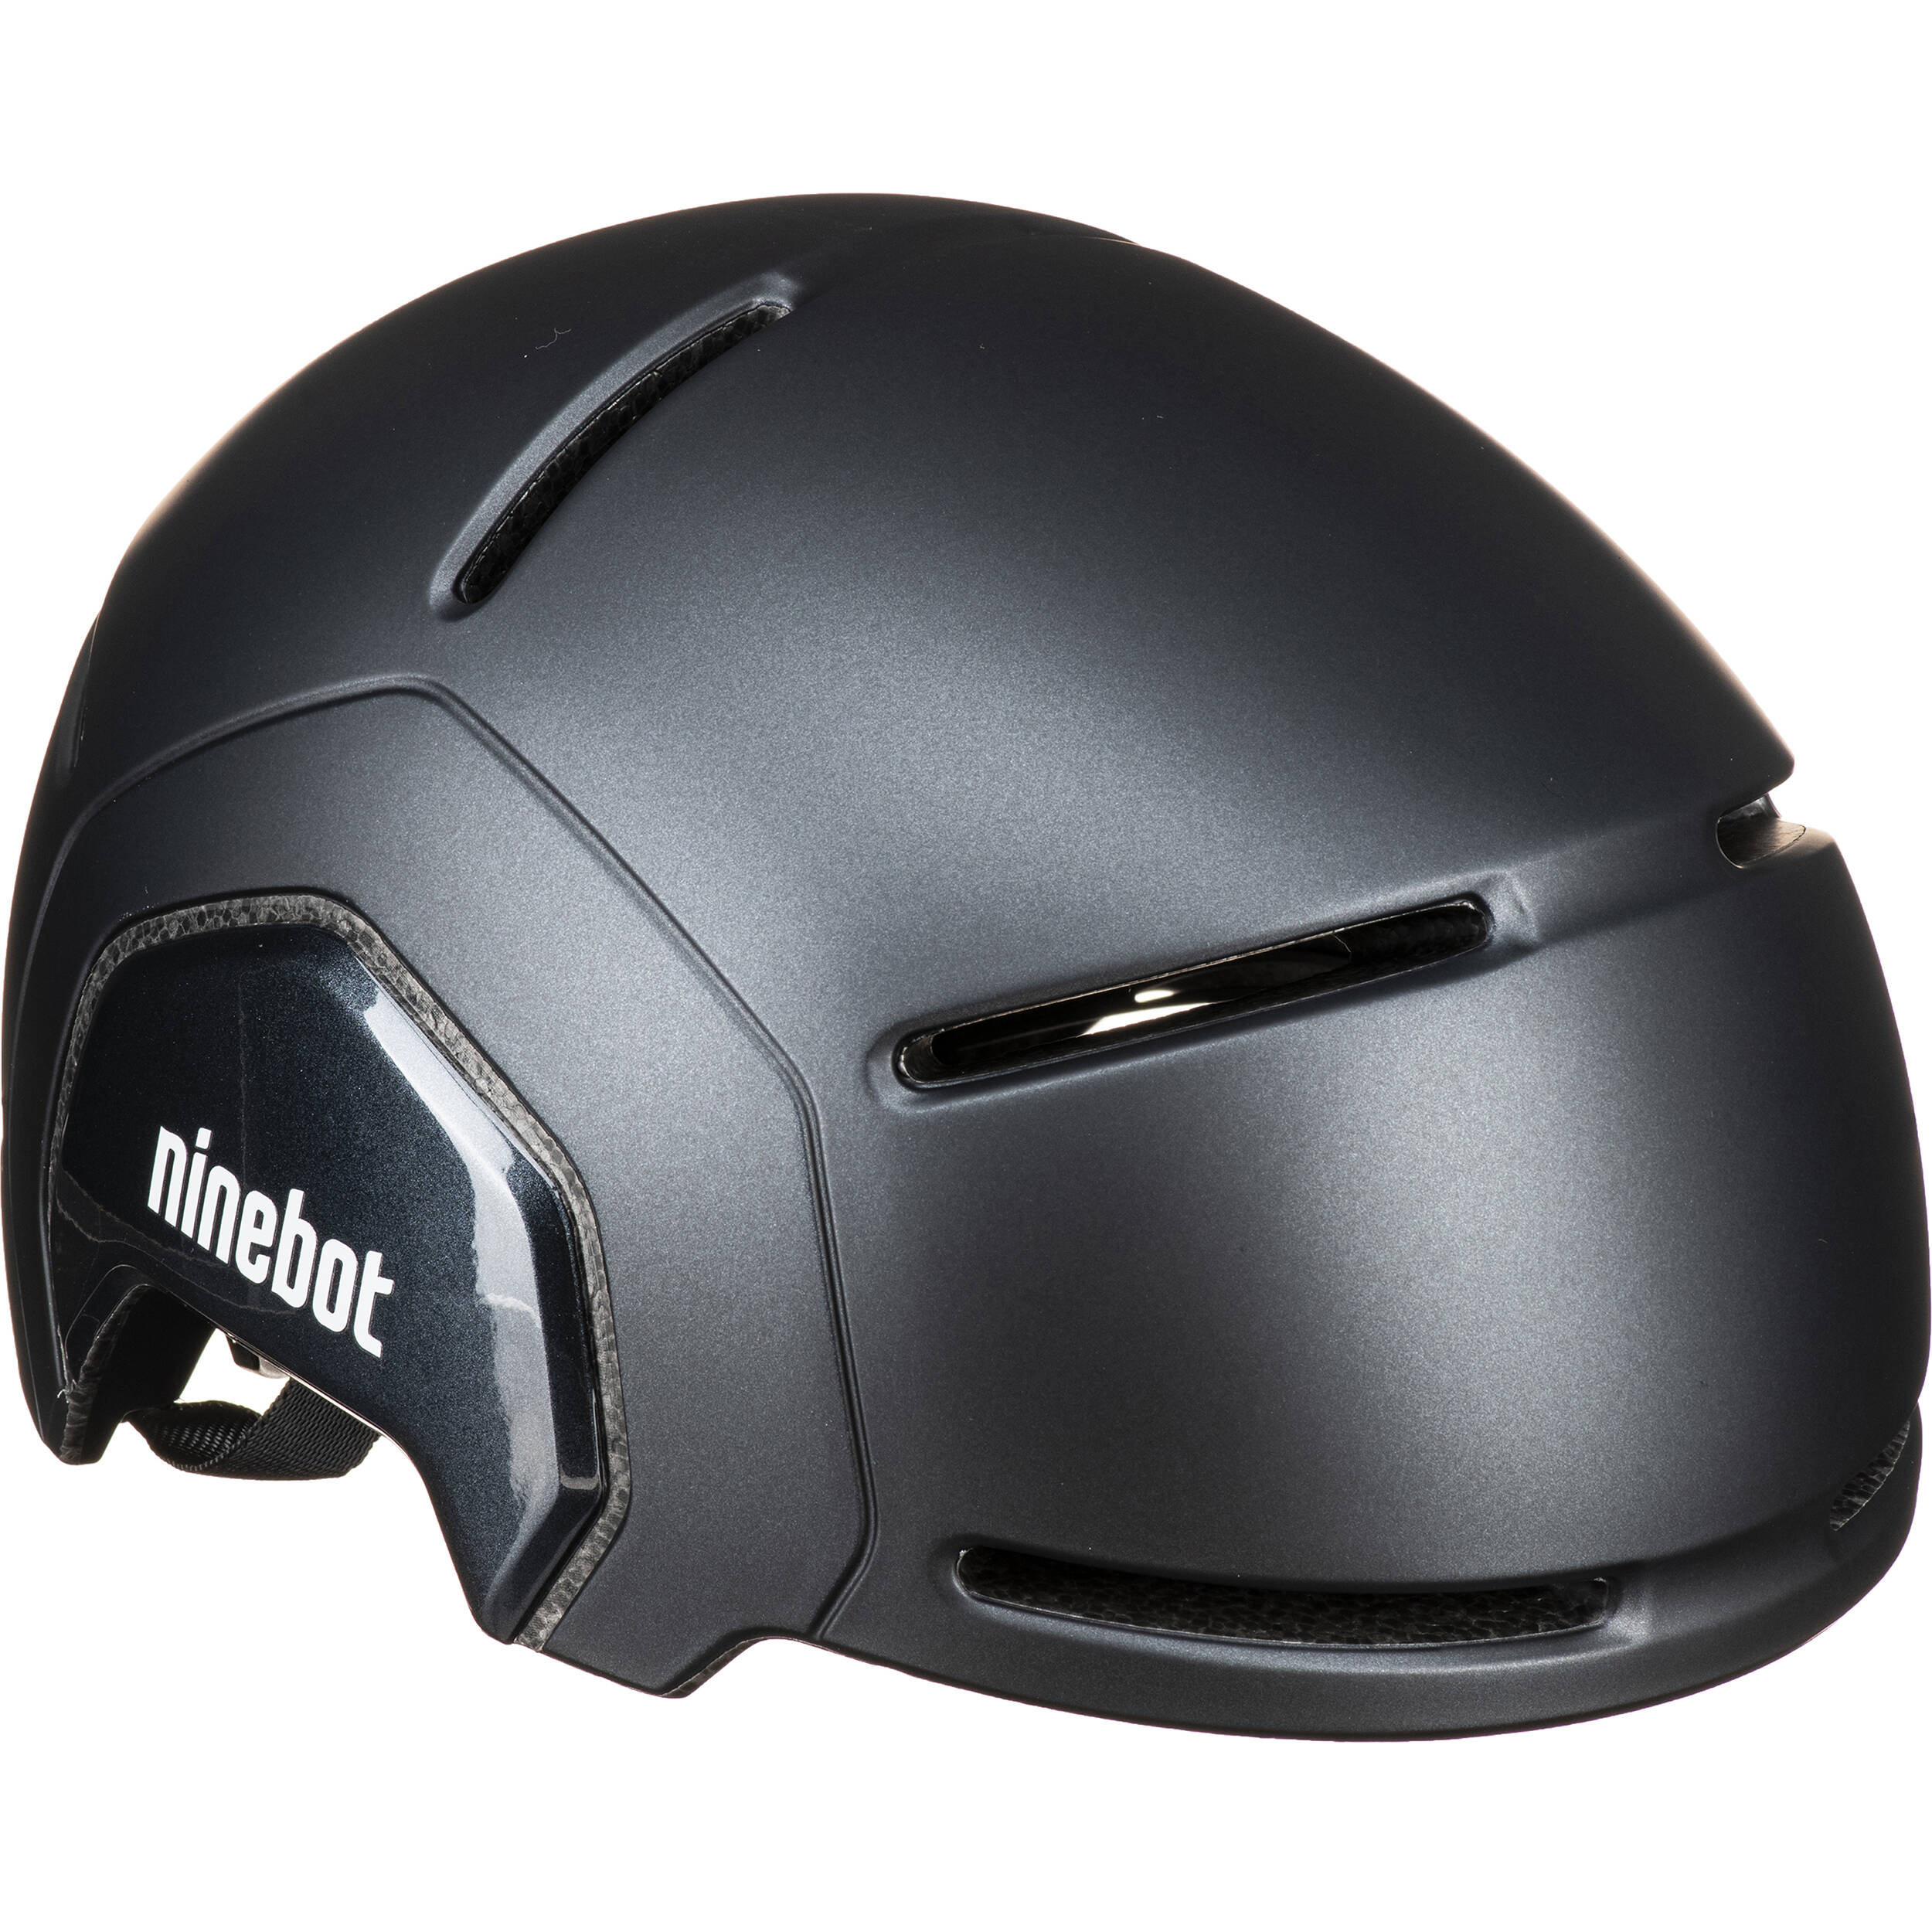 Segway Ninebot Helmet For Adults Black L Xl 99 0002 01 B H